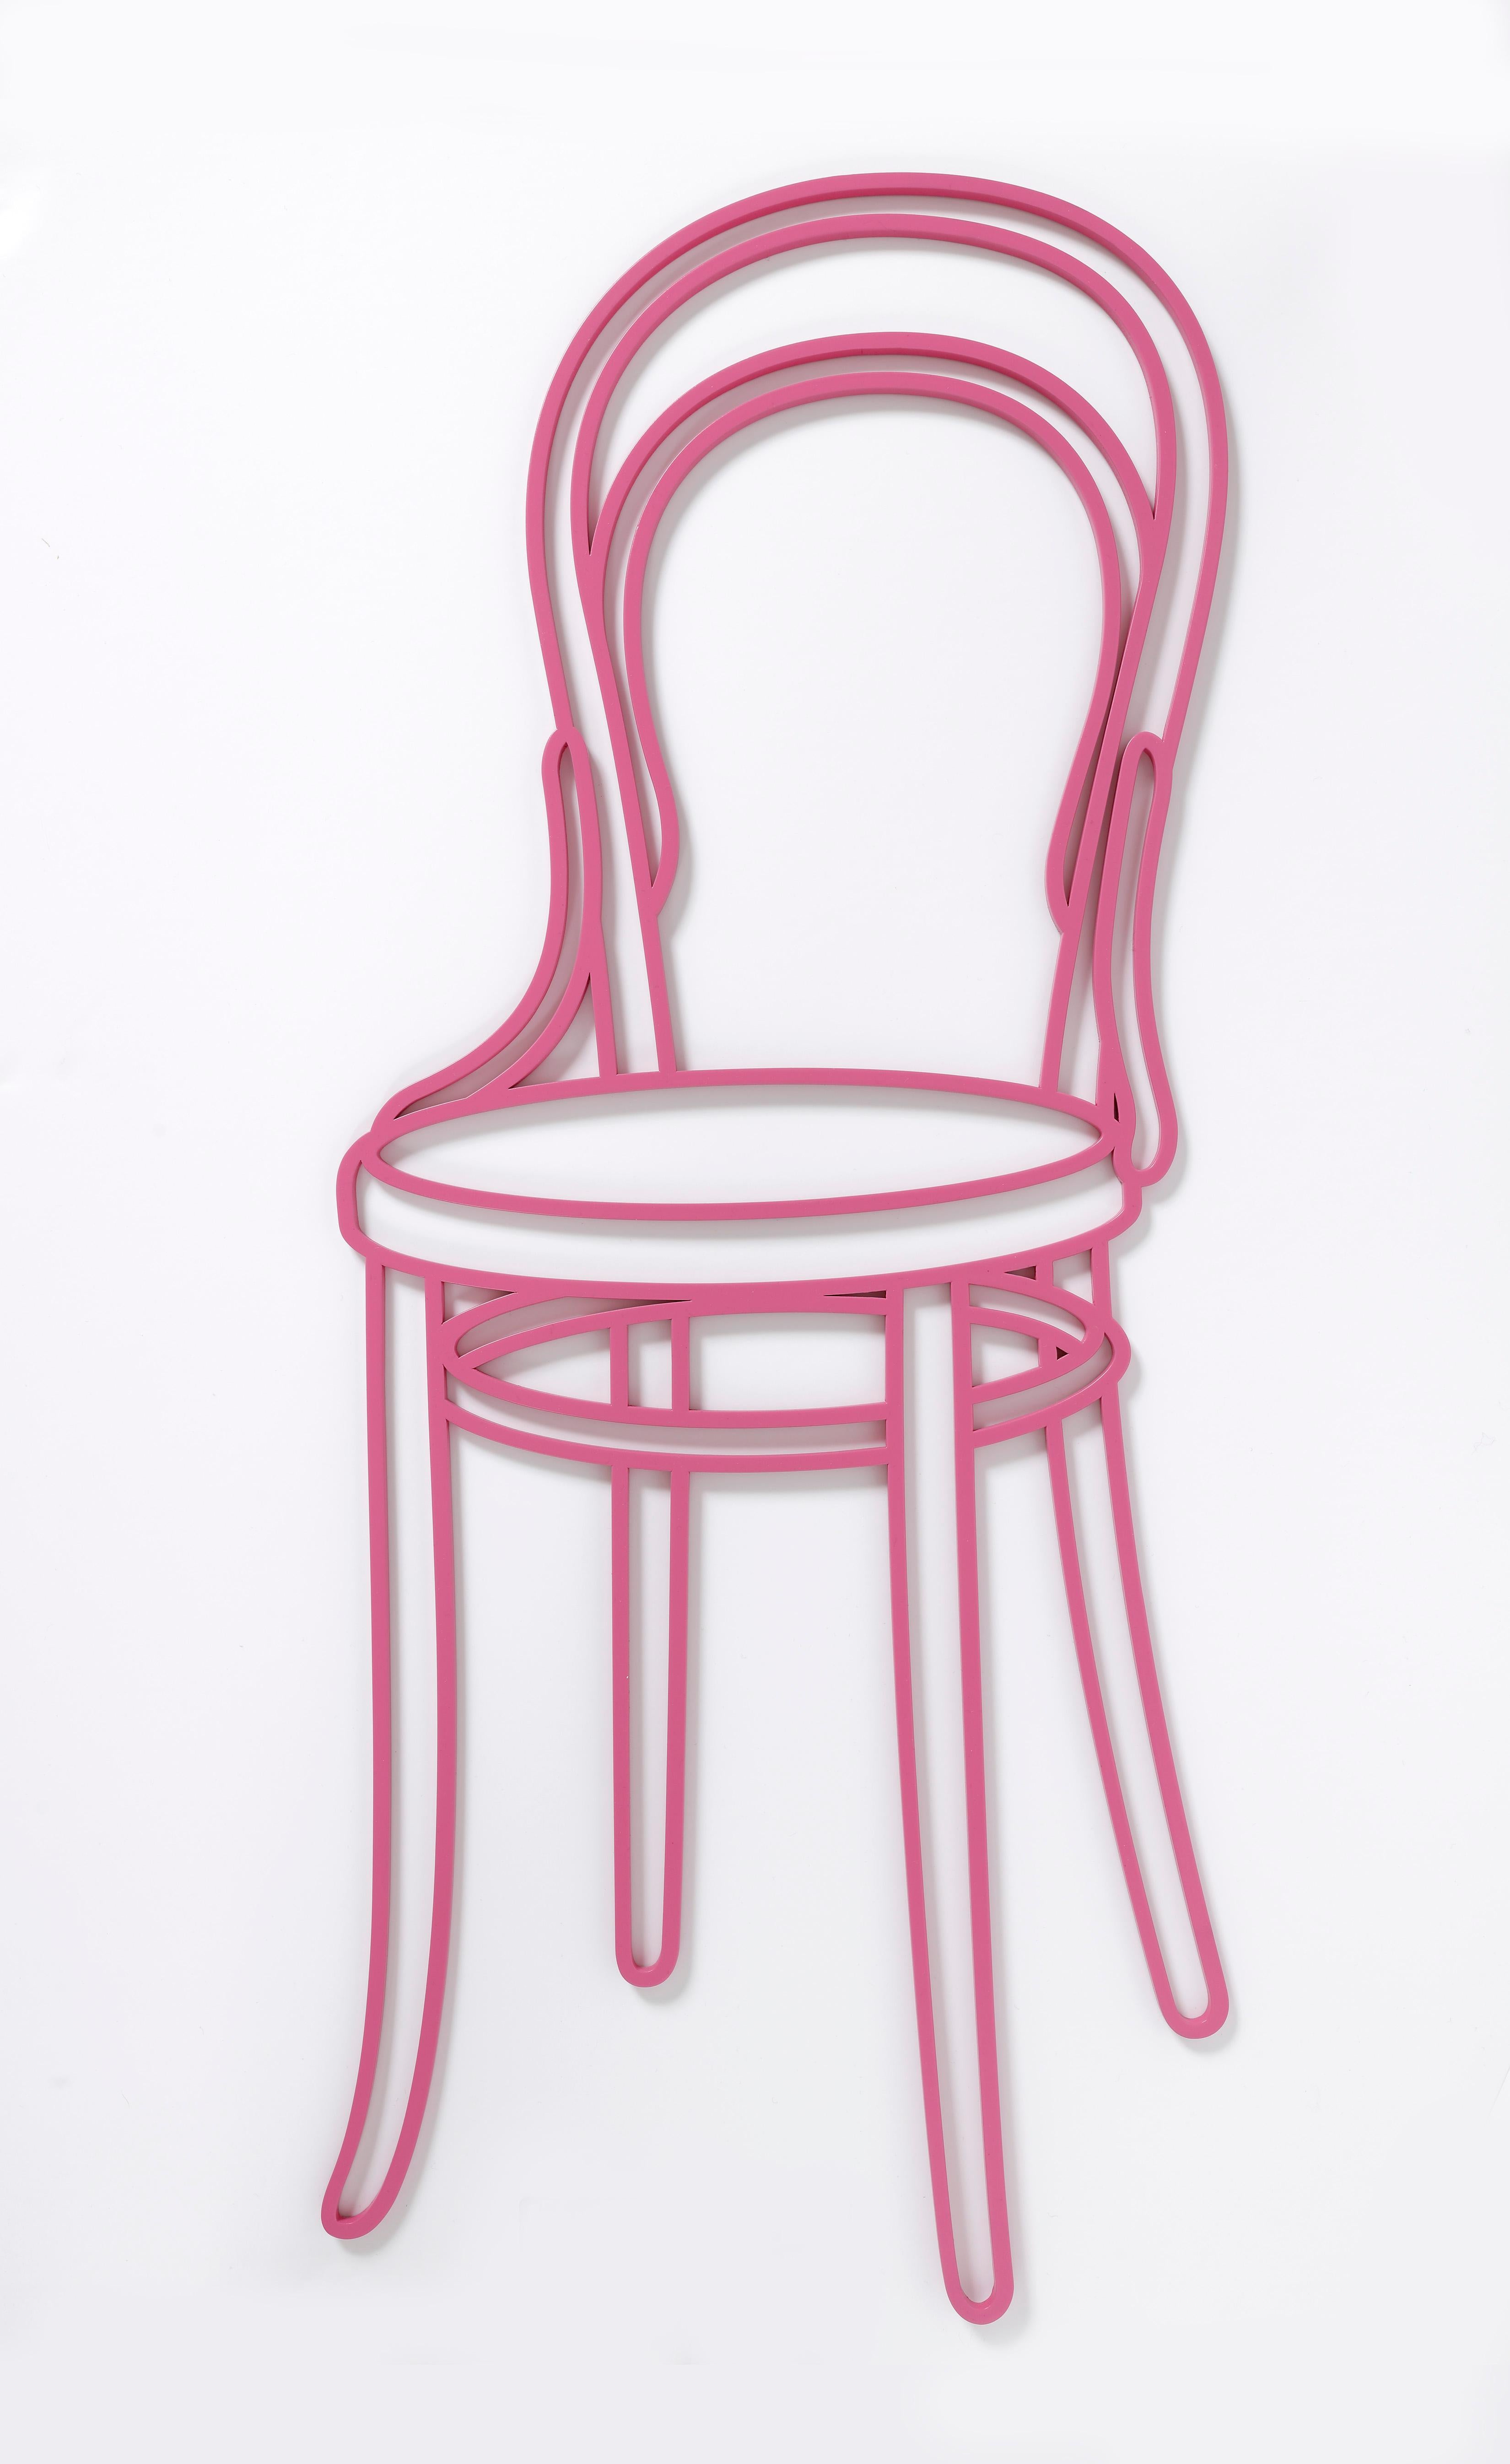 Thonet Chair - Mixed Media Art by Michael Craig-Martin